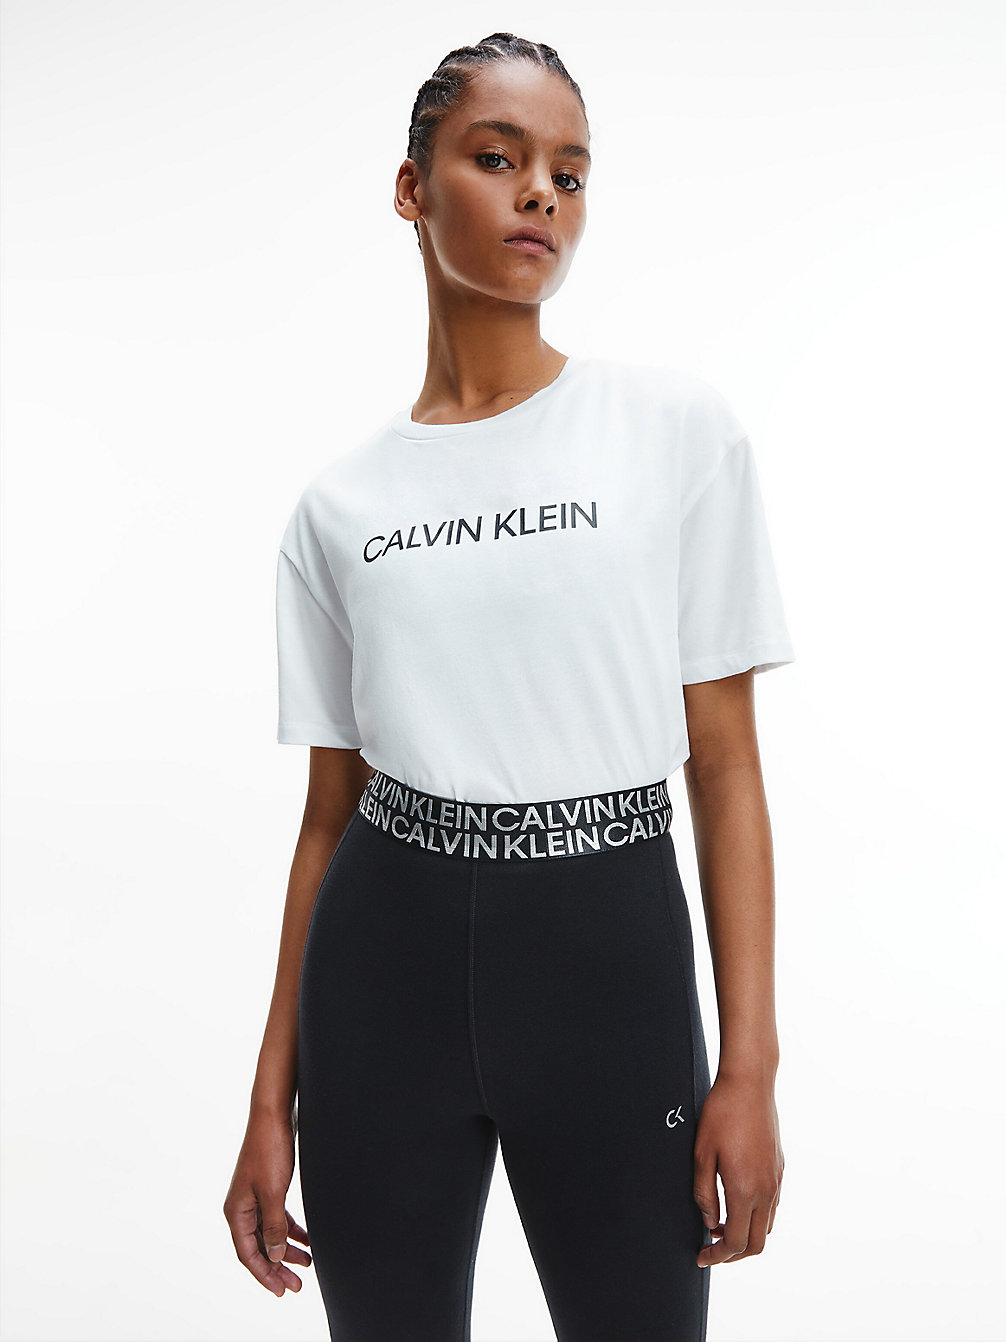 T-Shirt Da Palestra Con Logo Taglio Relaxed > BRIGHT WHITE > undefined donna > Calvin Klein